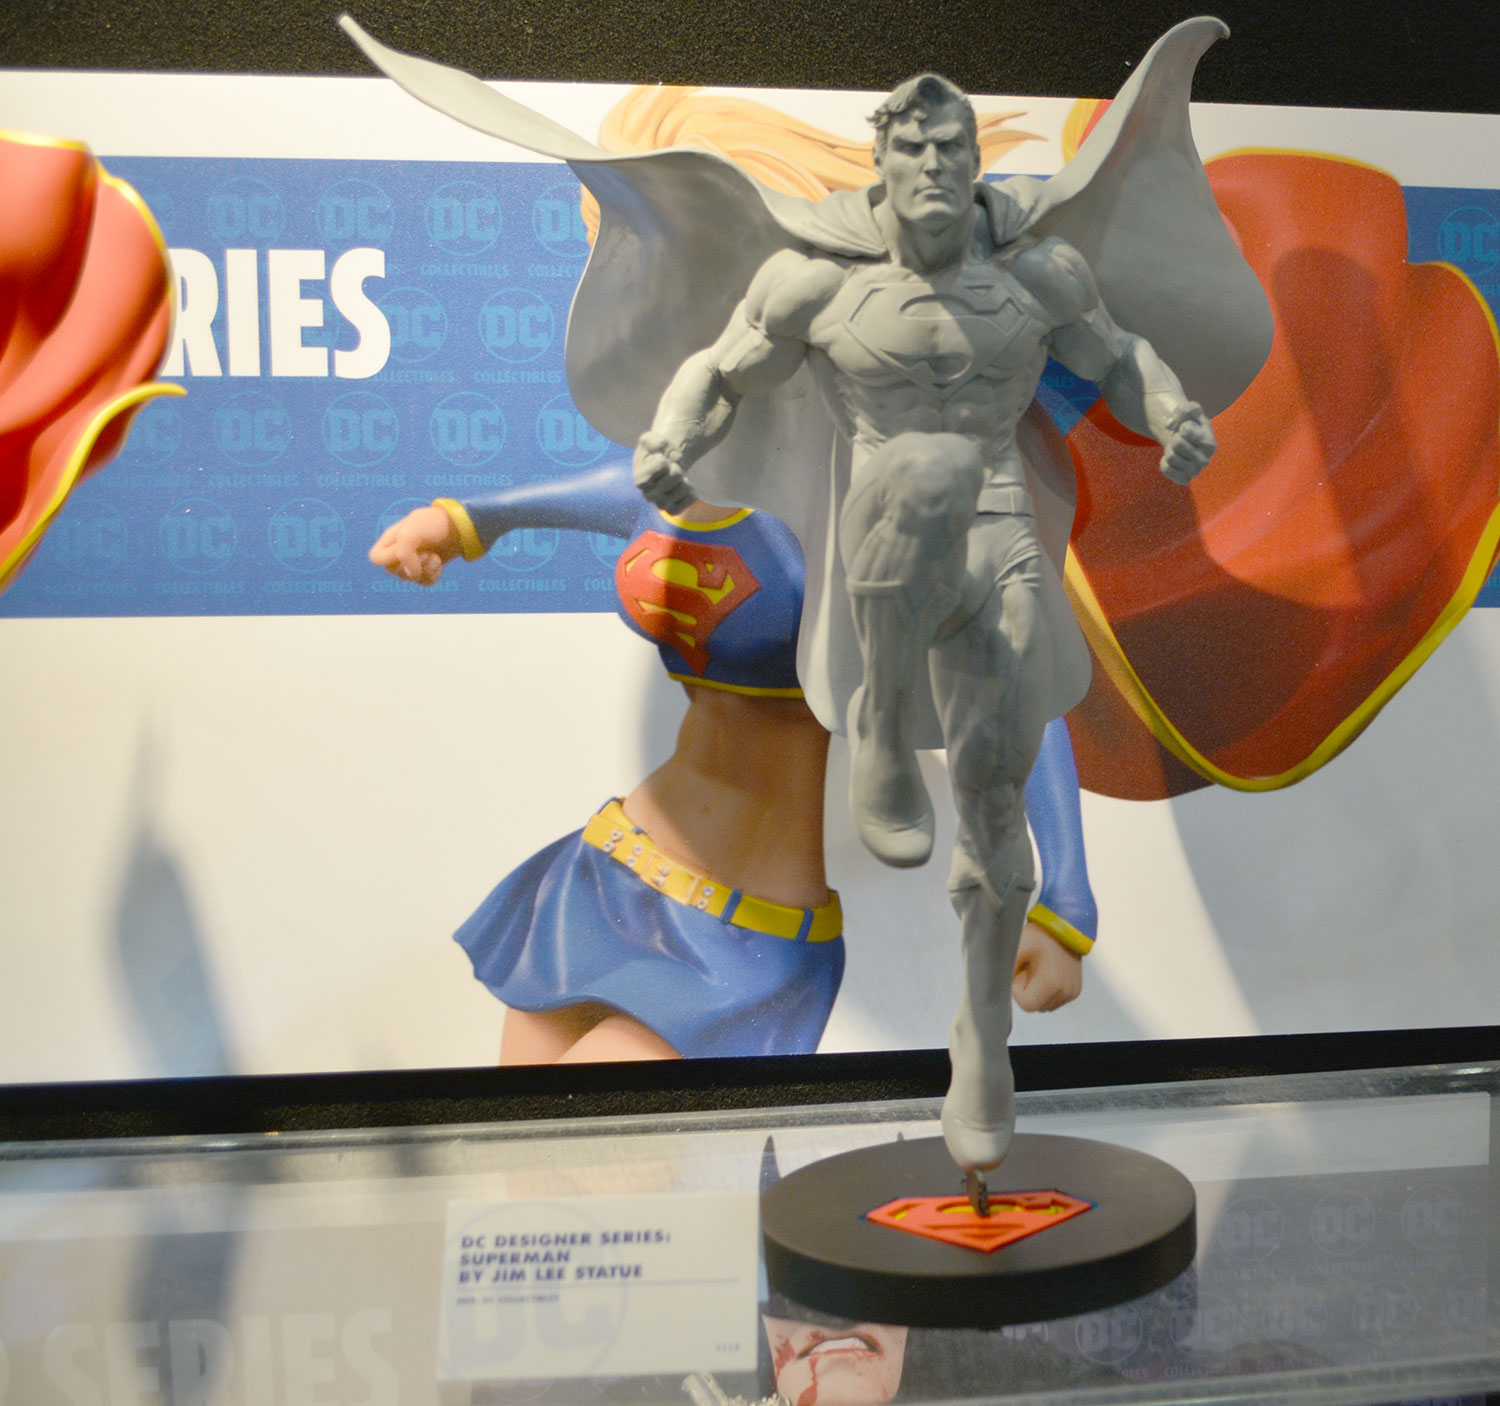 DC Designer Series Jim Lee Superman Resin New York Toy Fair